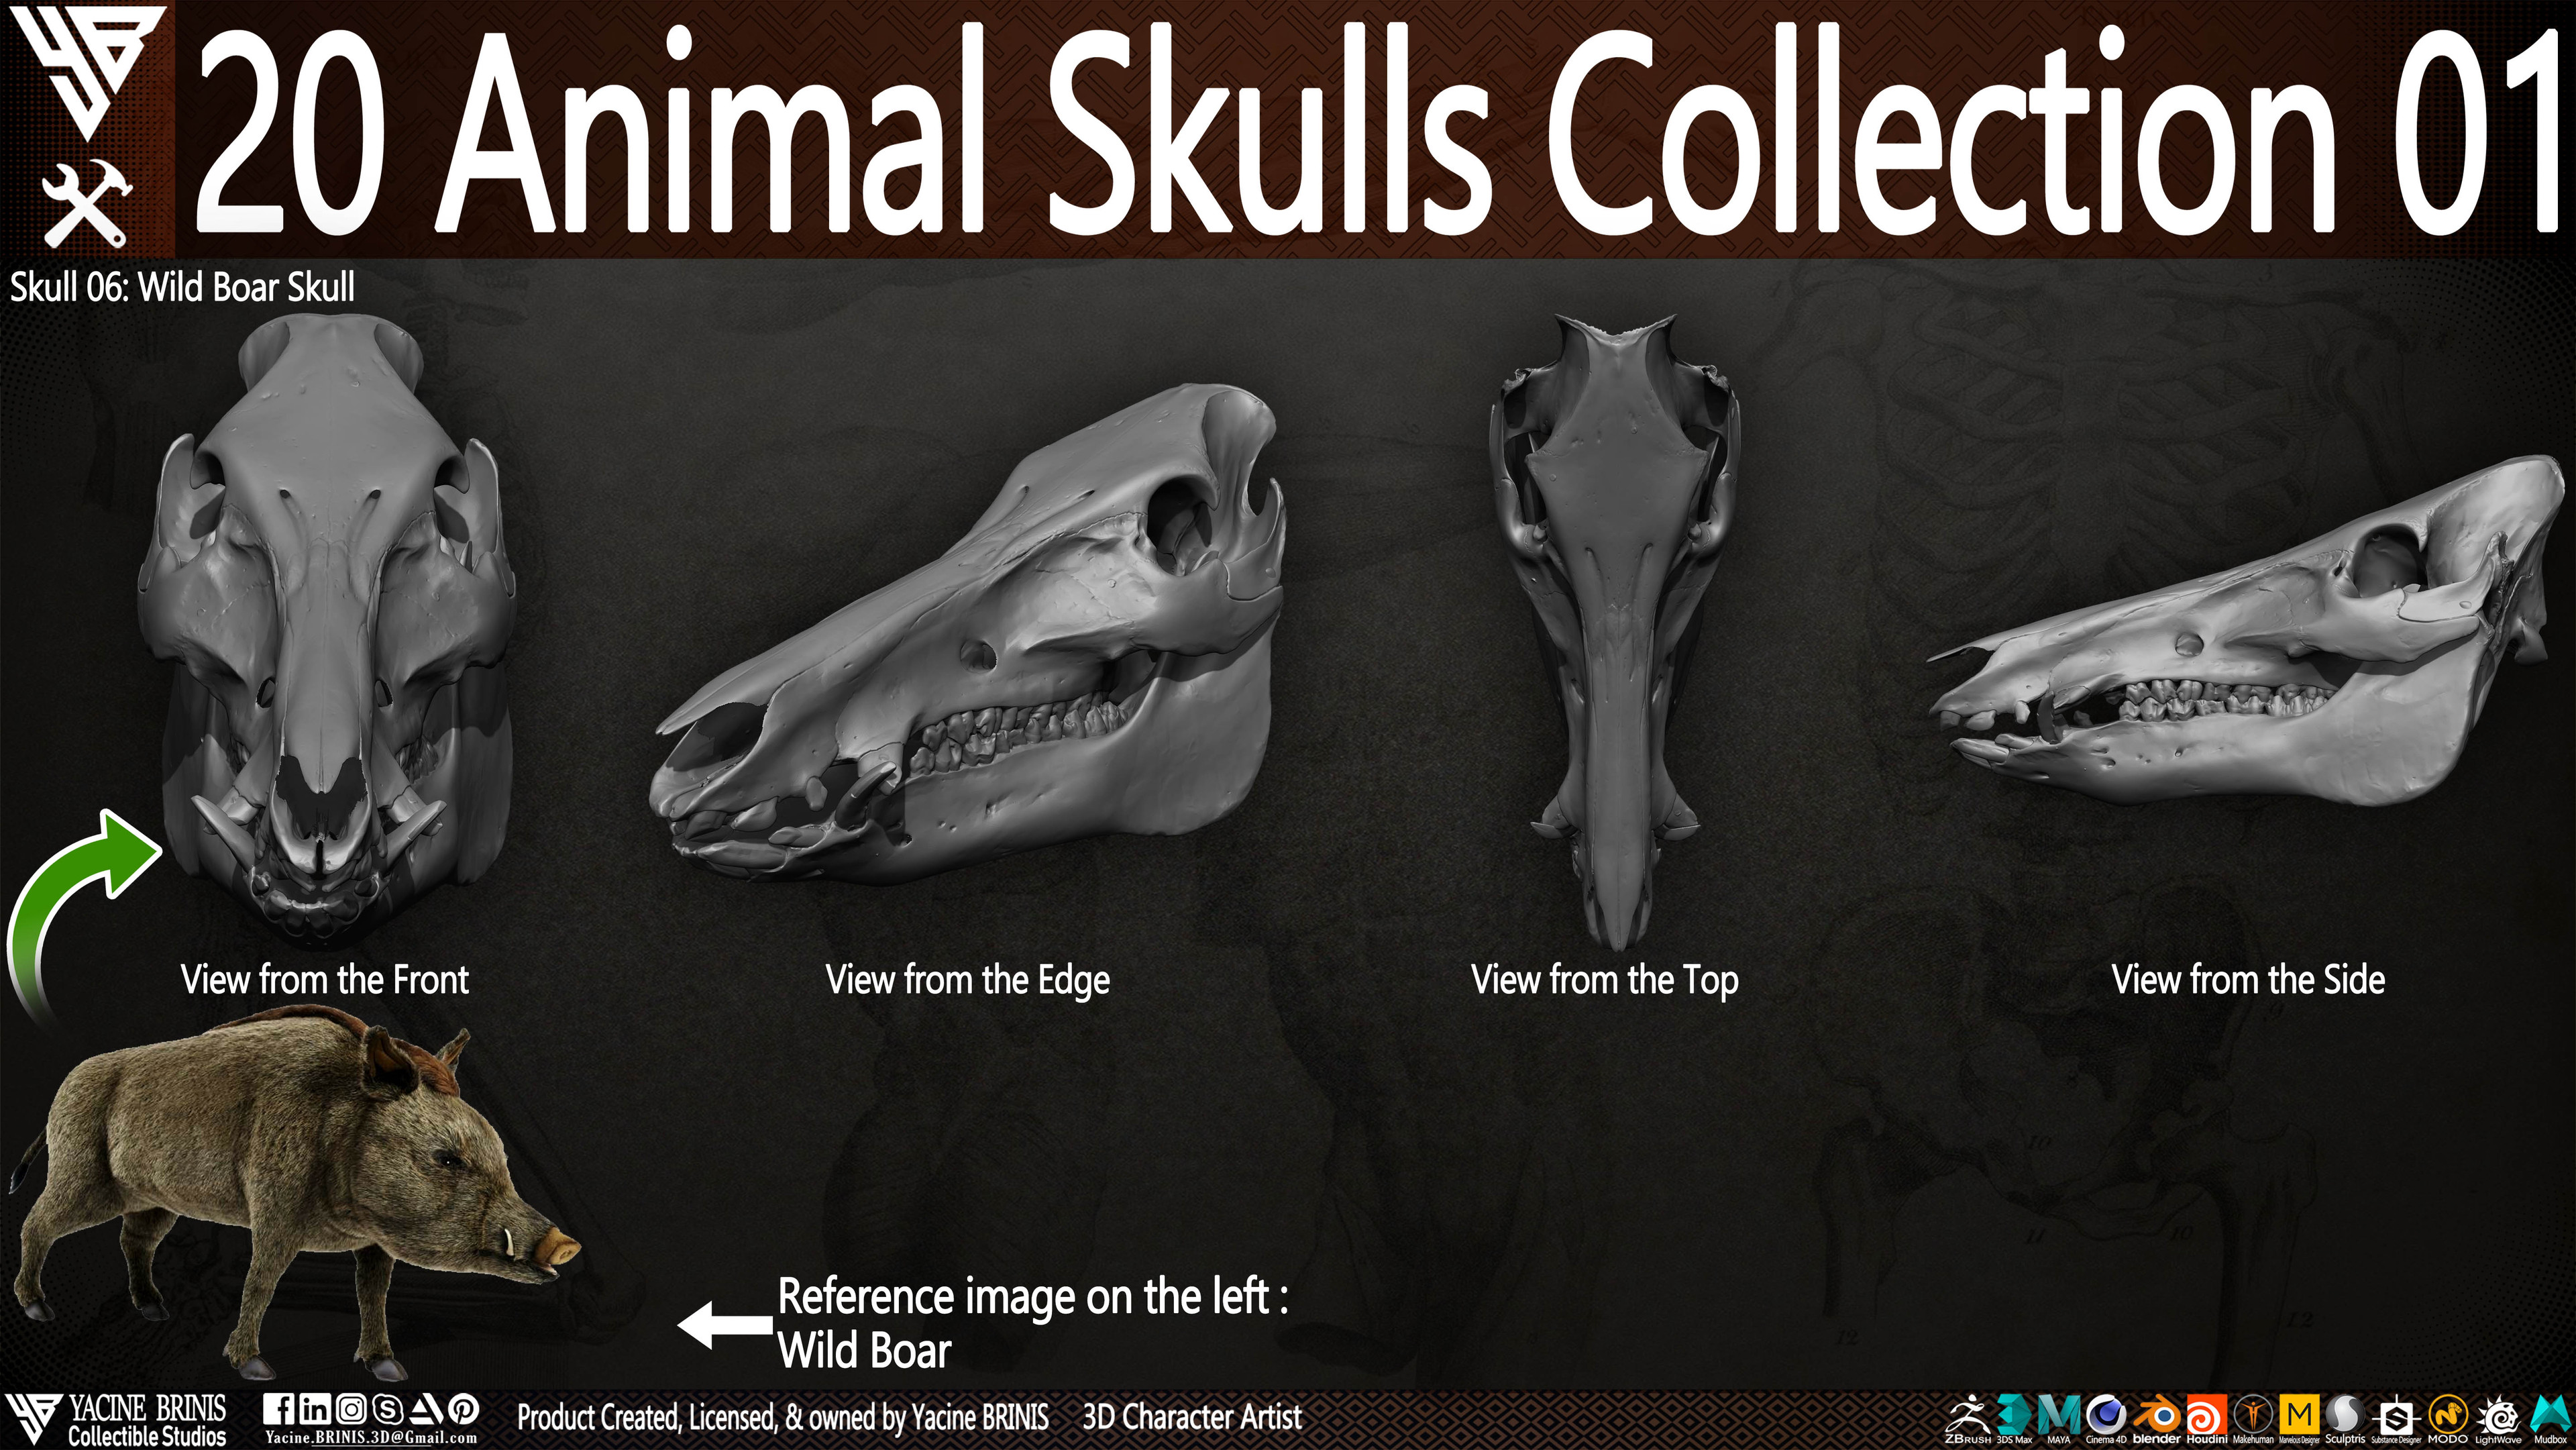 20 Animal Skulls Collection 03 By Yacine BRINIS Set 019